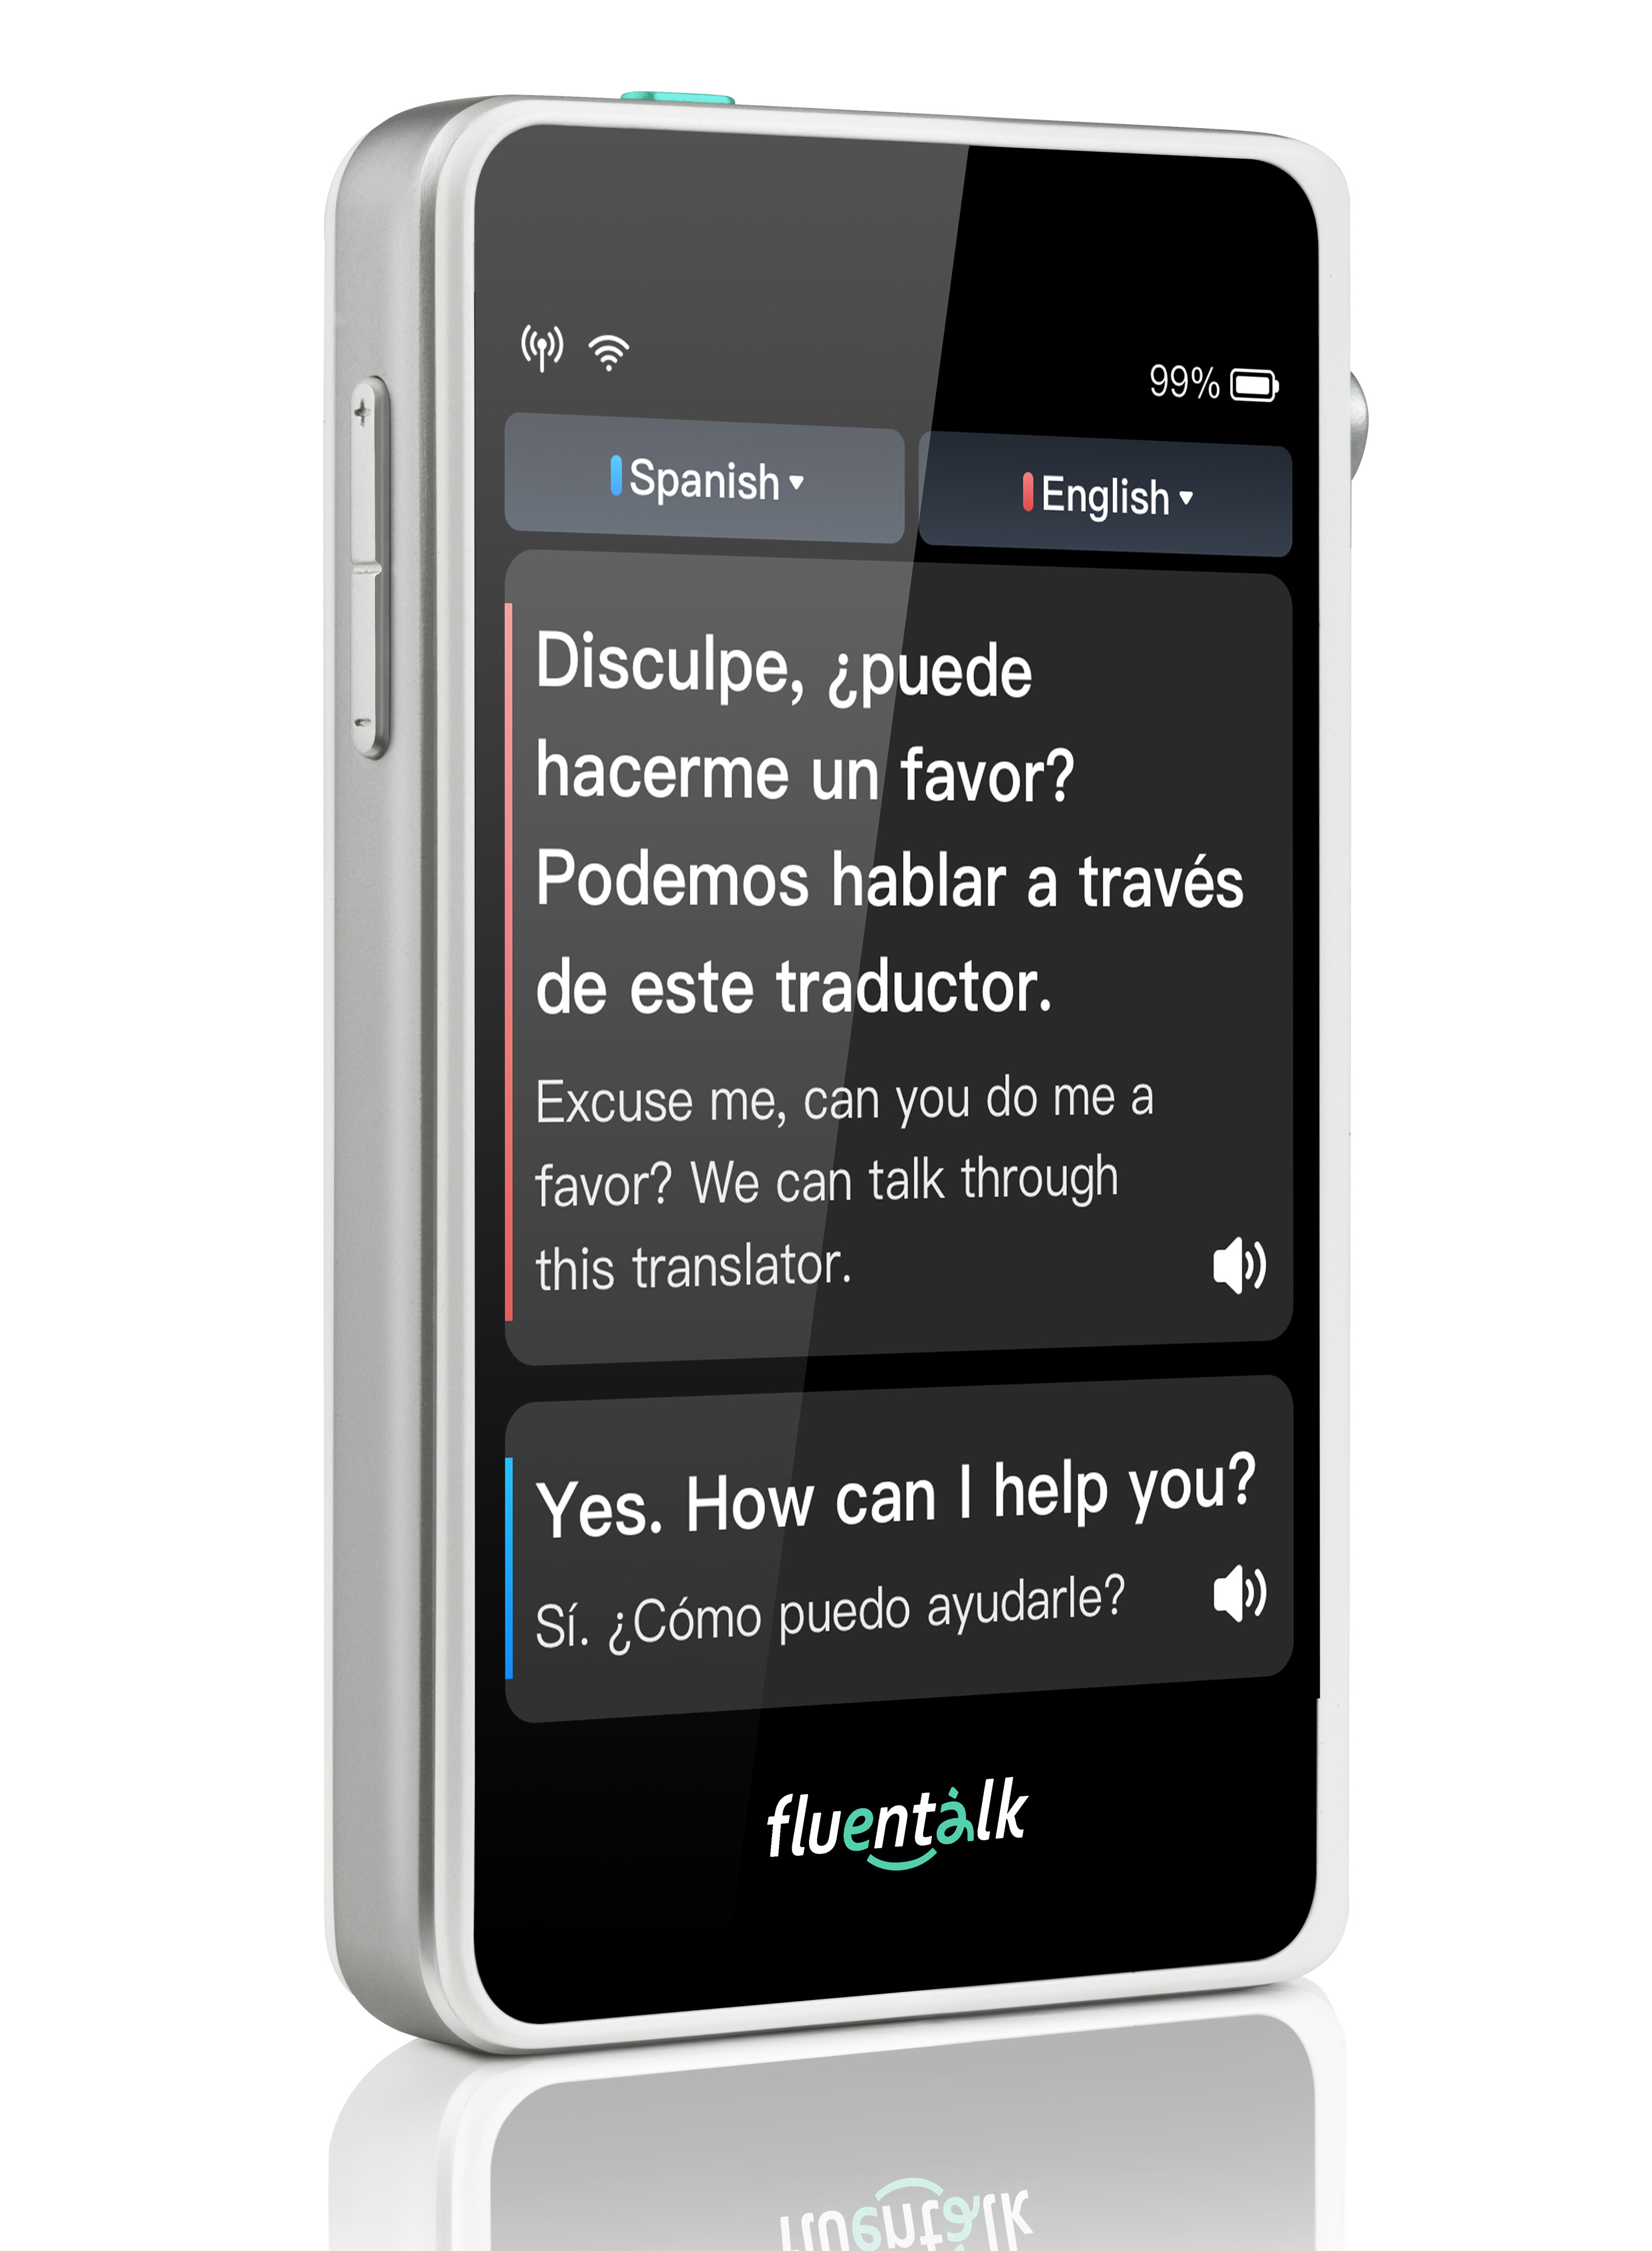 Fluentalk T1 Mini by Timekettle review - Don't speak the language